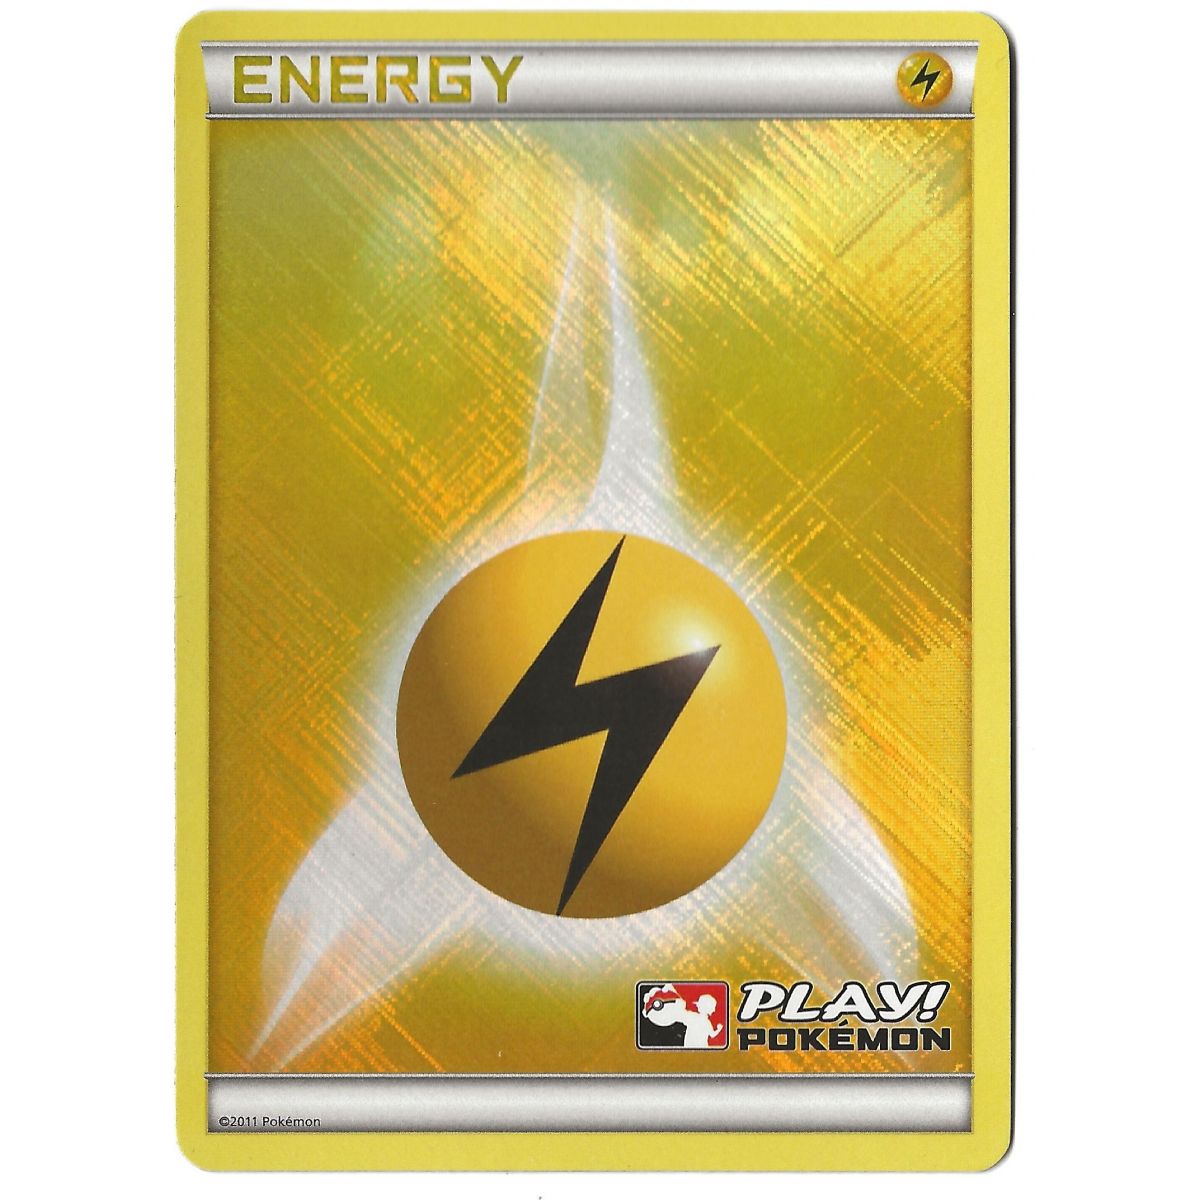 Energy Electric Play! Pokémon - Reverse Rare - 2011